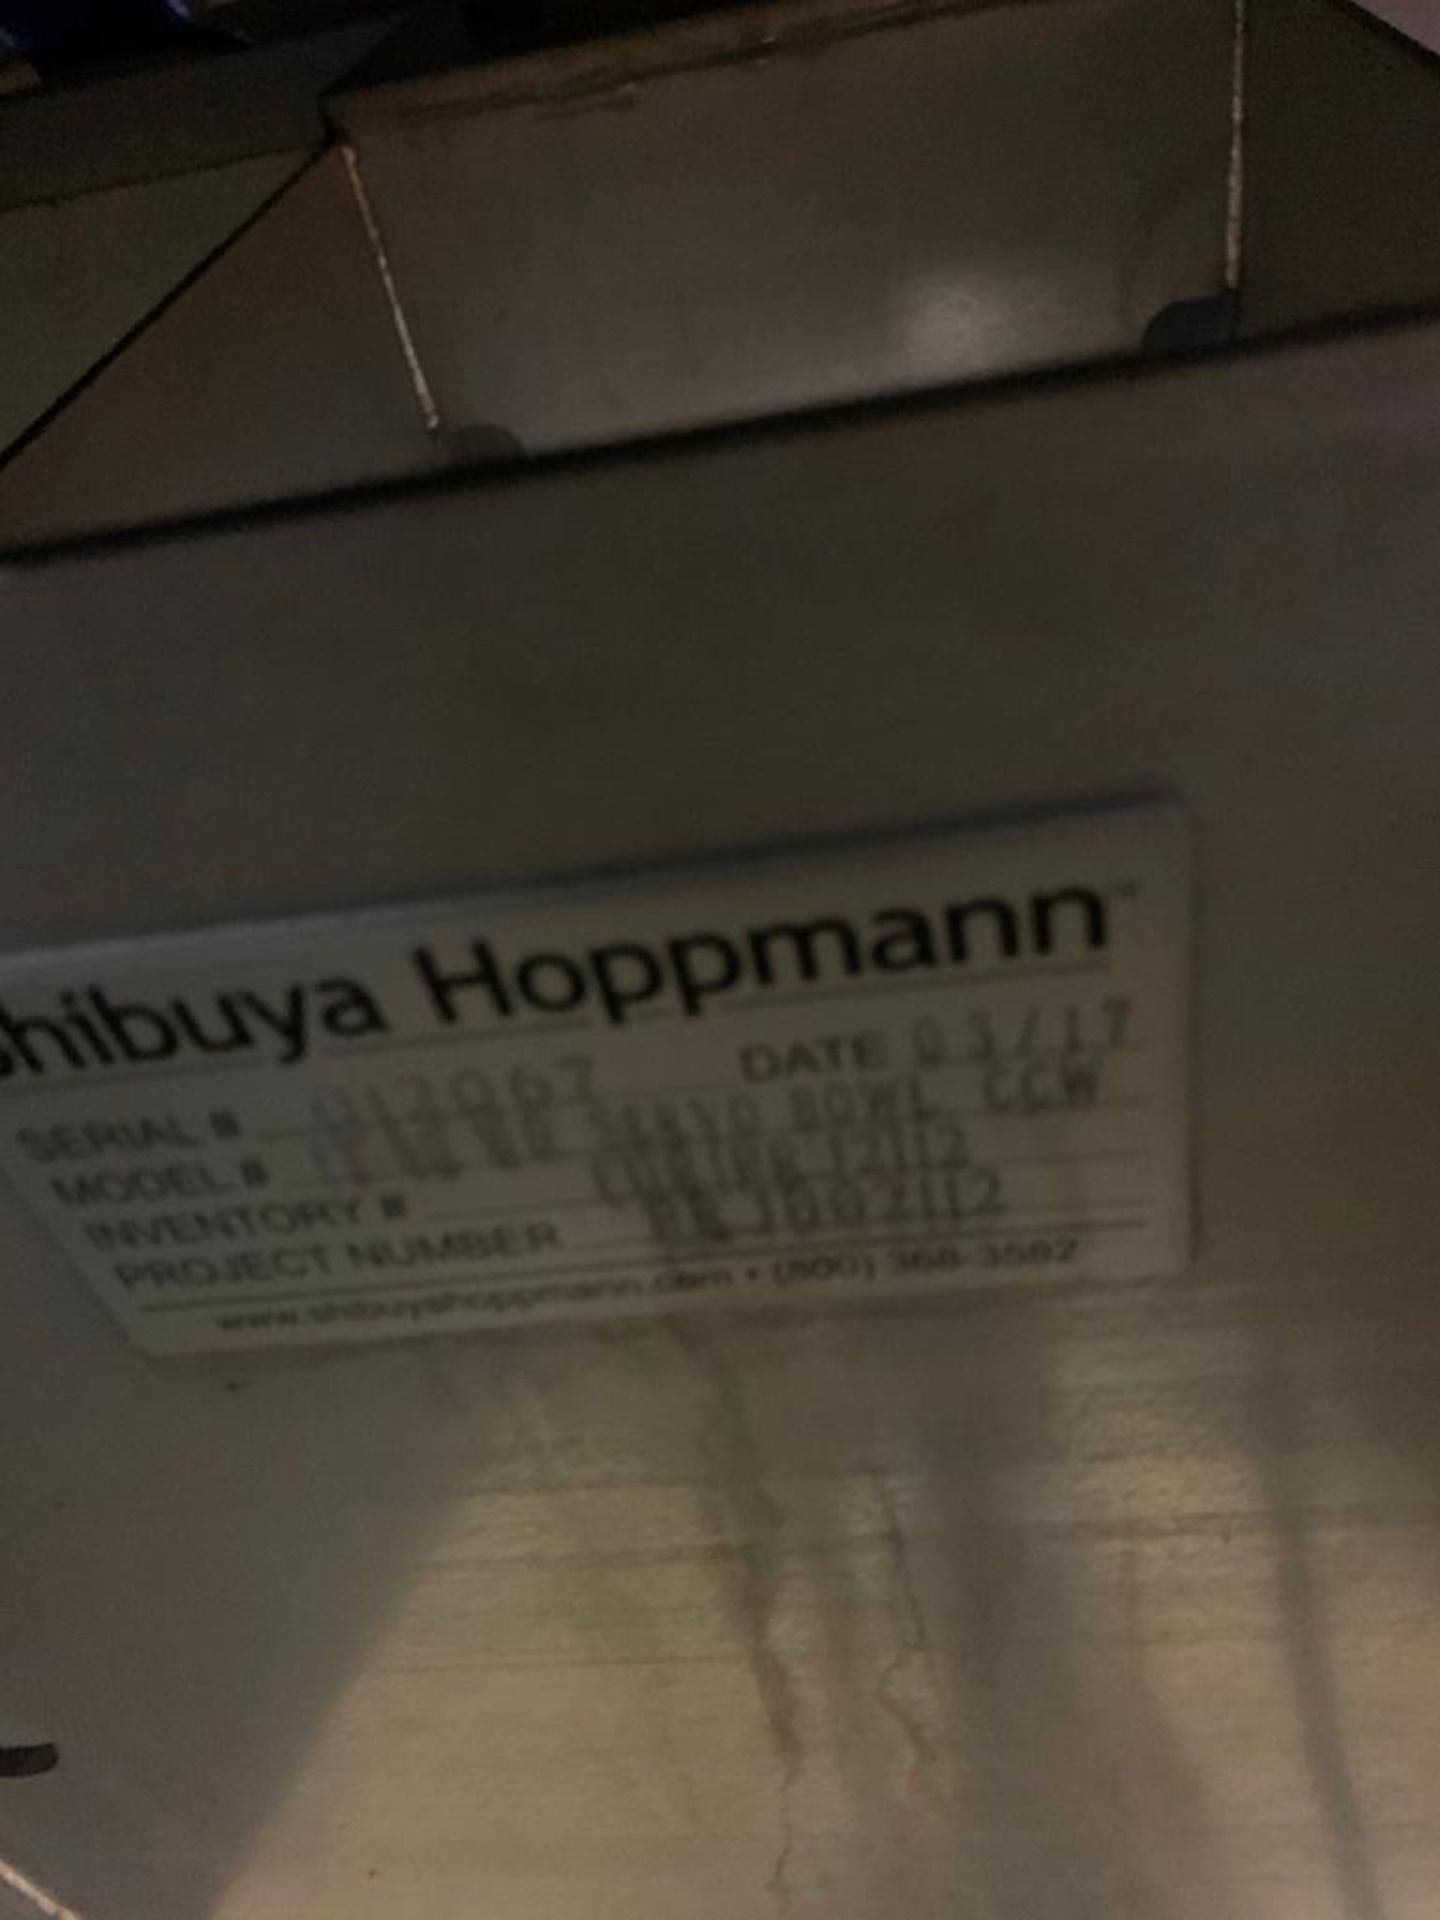 2017 Shibuya Hoppann servo bowl feeder - Image 5 of 6